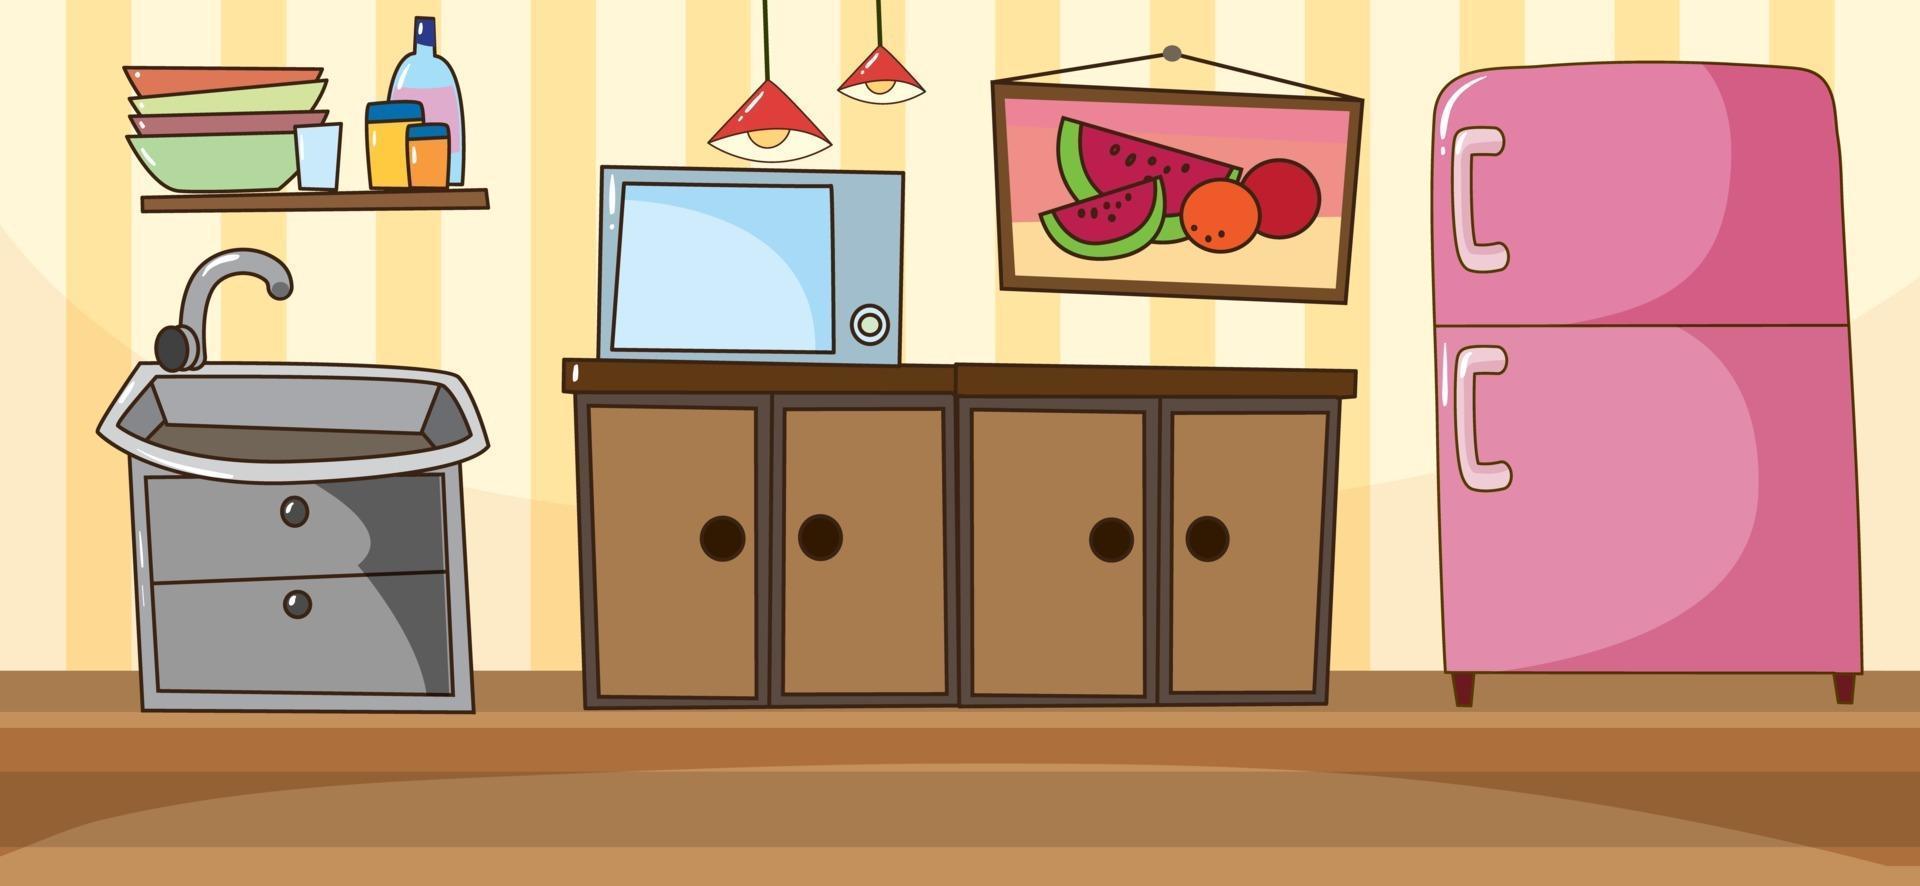 Empty kitchen room scene with kitchen elements vector